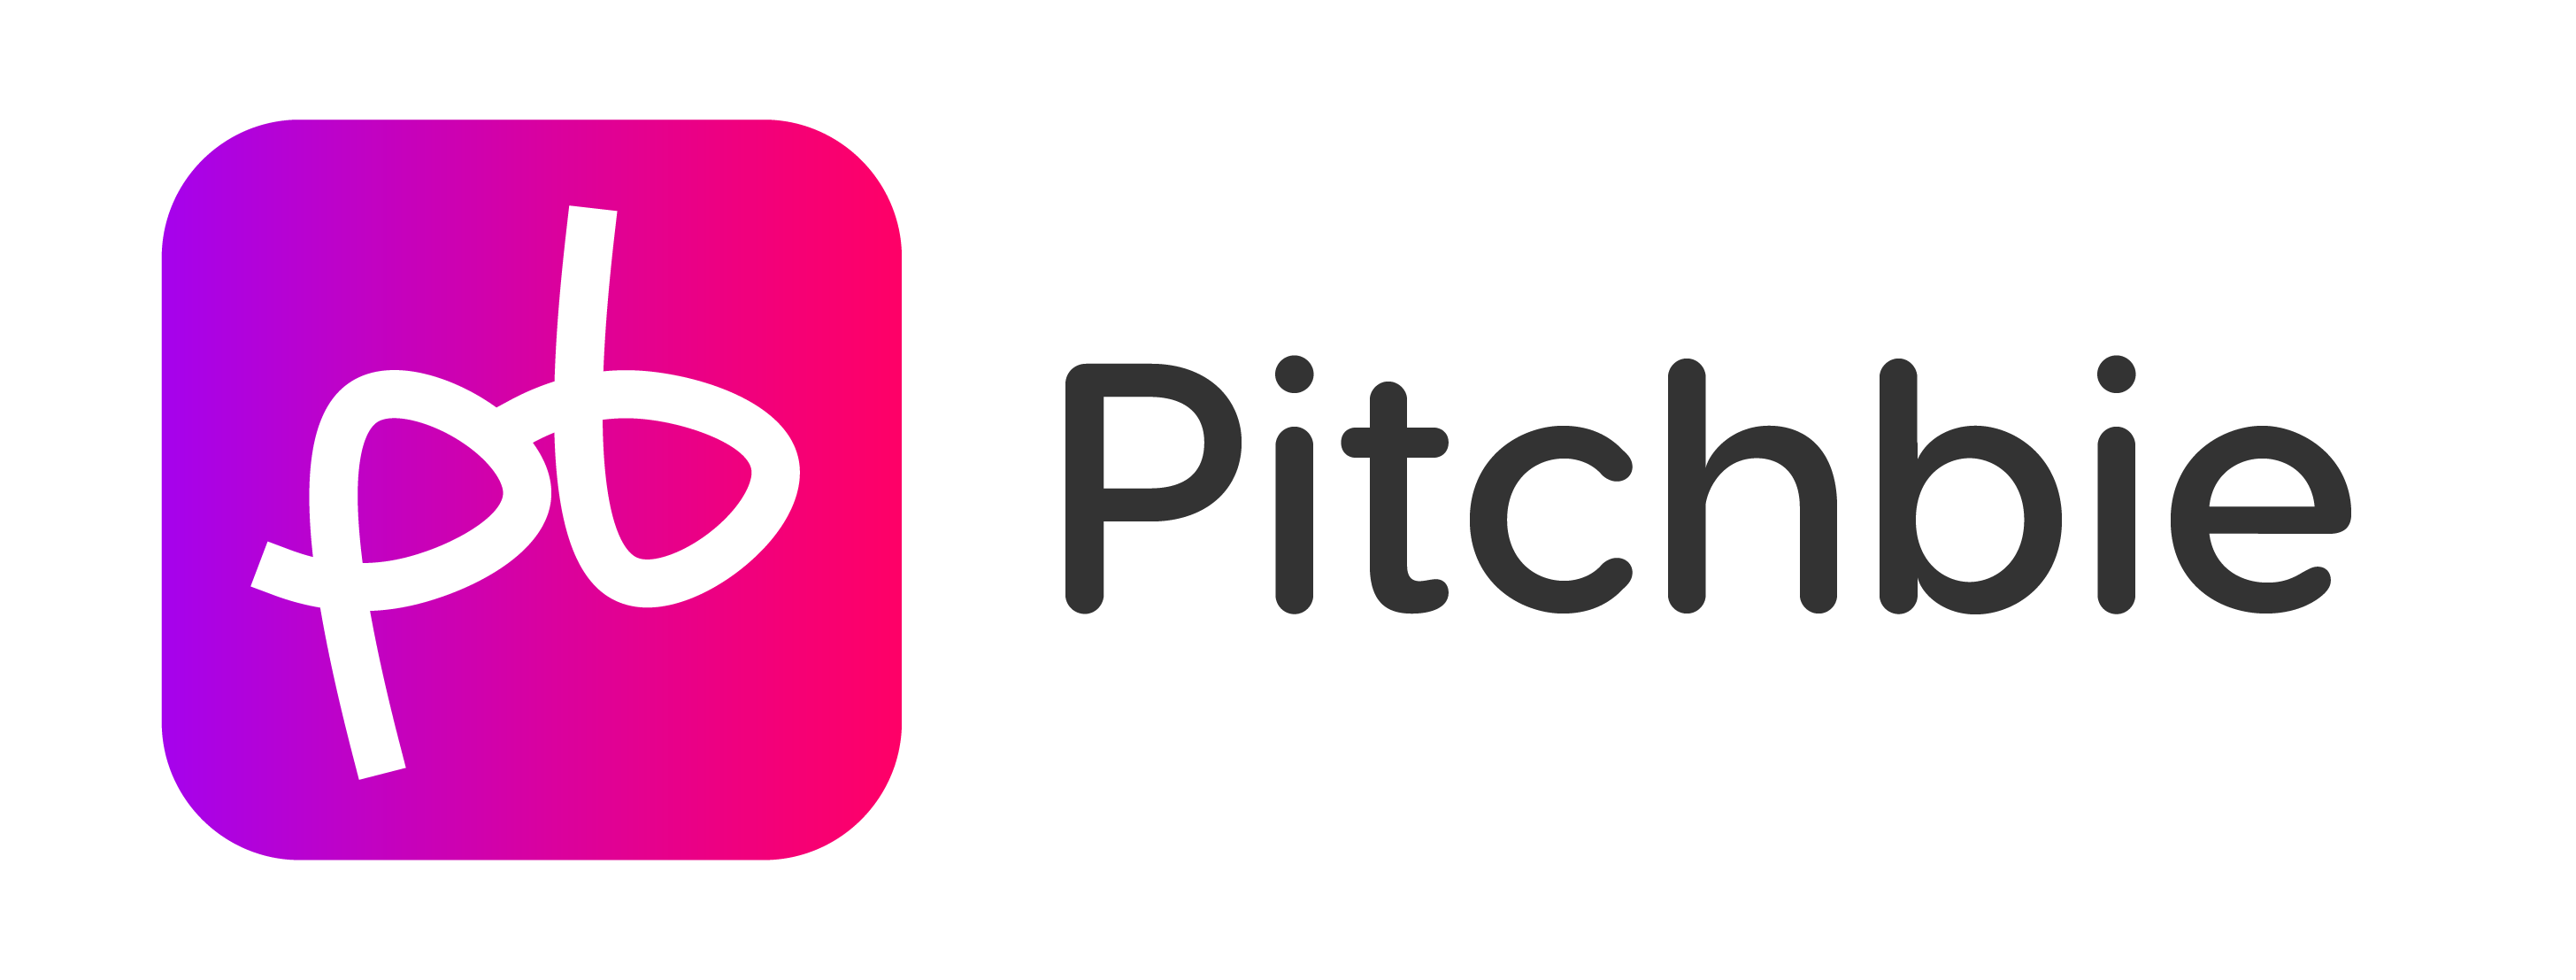 Pitchbie logo